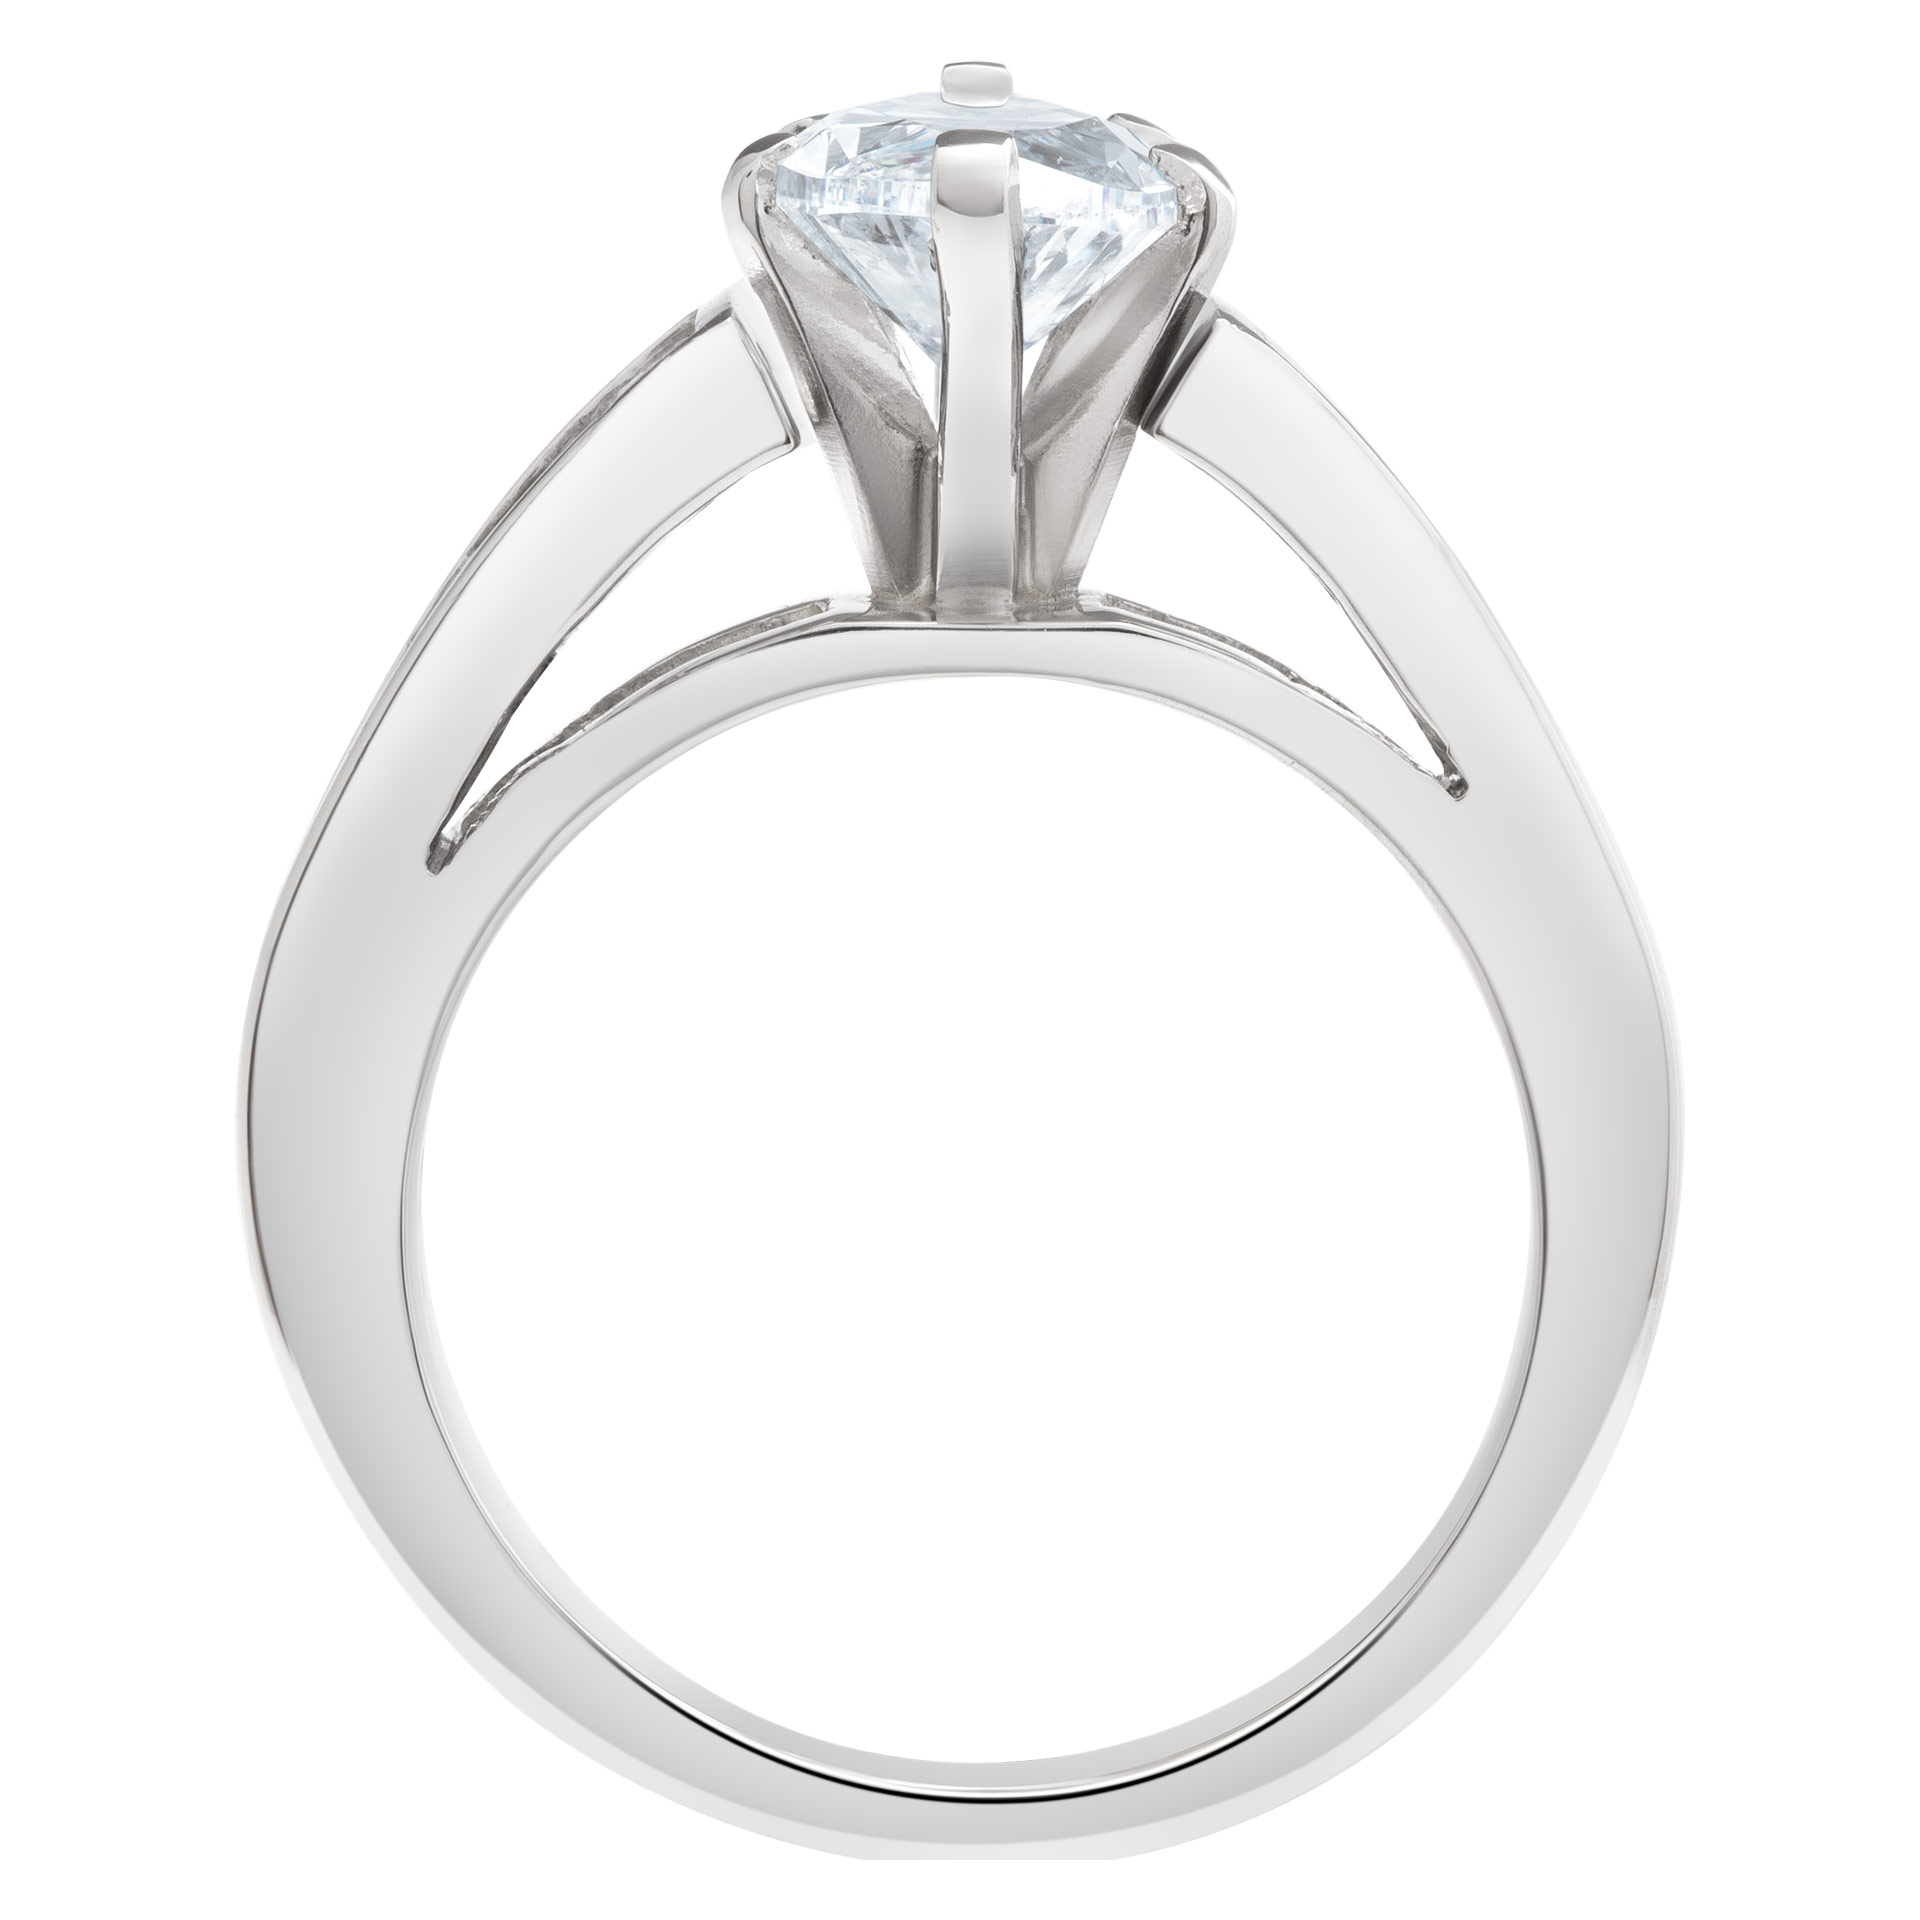 GIA certified marquise brilliant cut diamond 1.53 carat (D color, SI1 clarity) set in platinum setting image 5